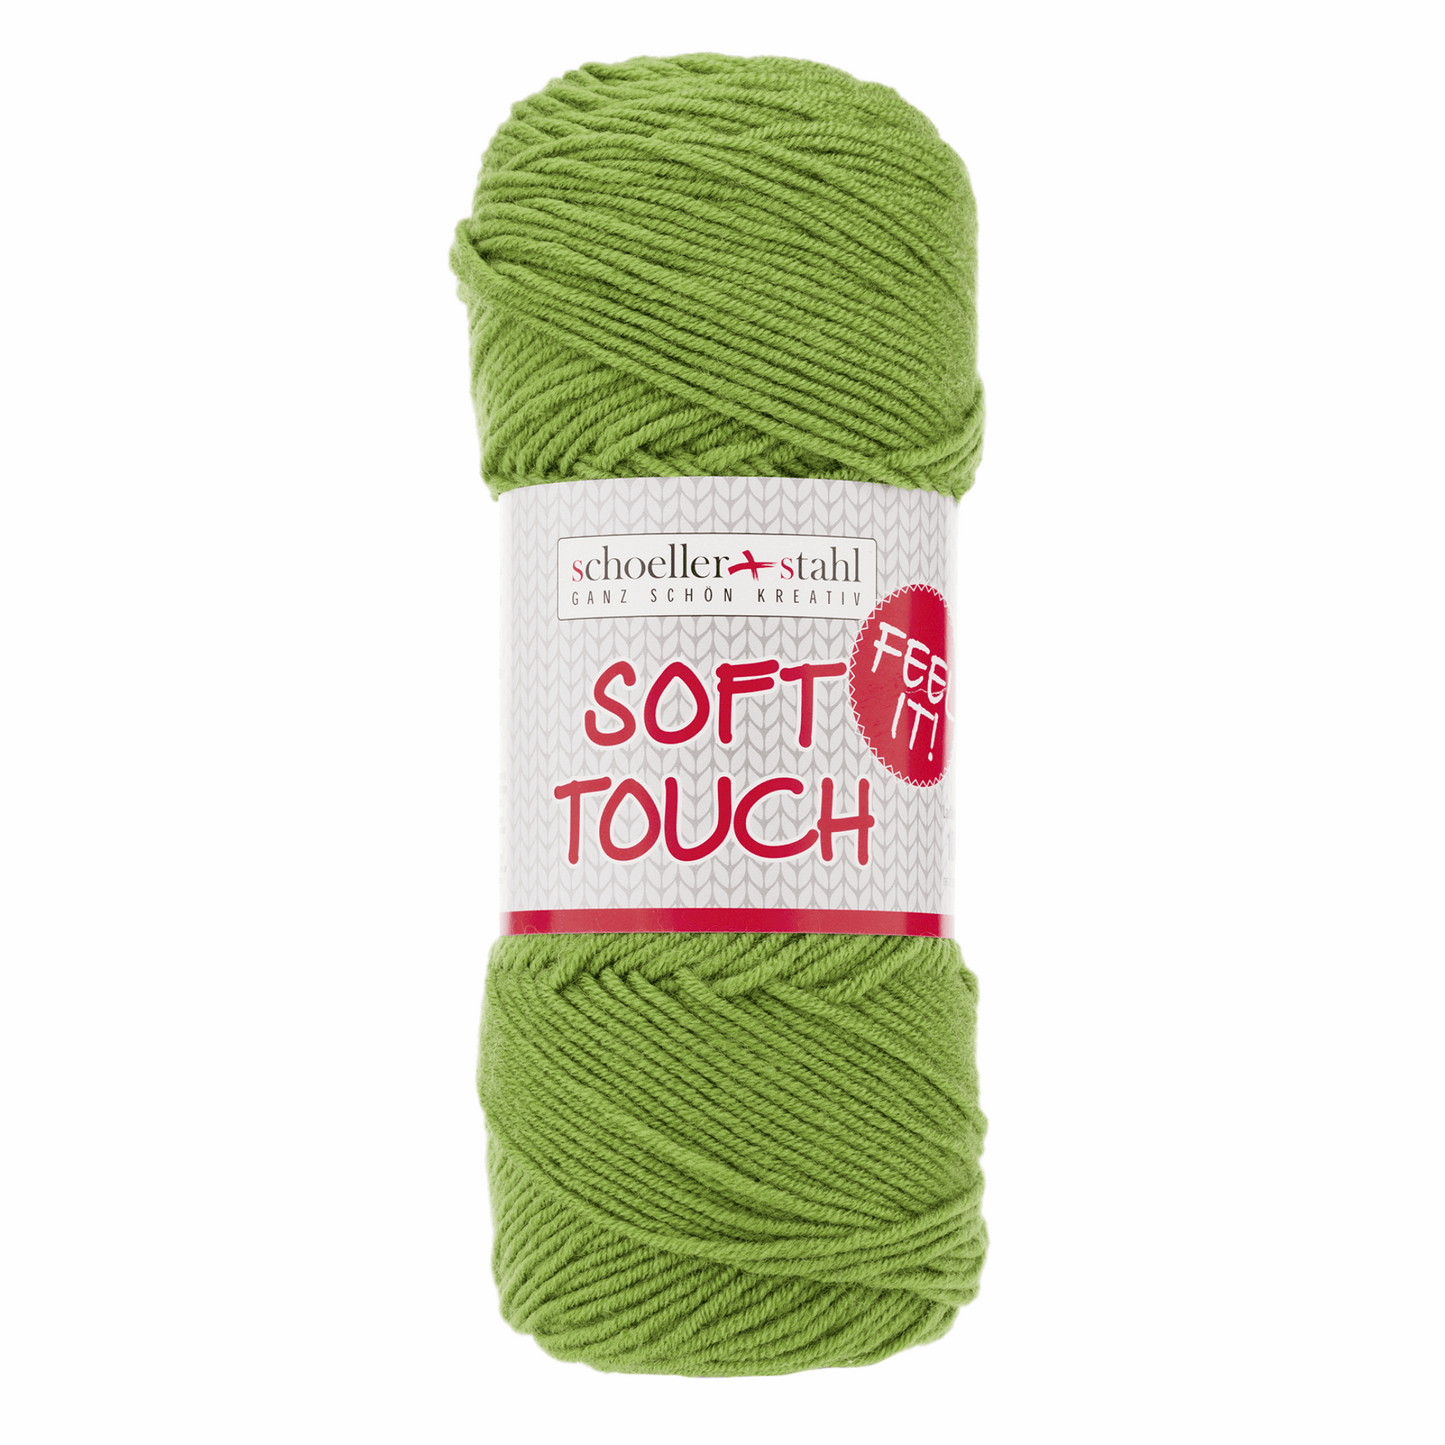 Soft touch 100g pullskin, 90283, Farbe 10, apfel